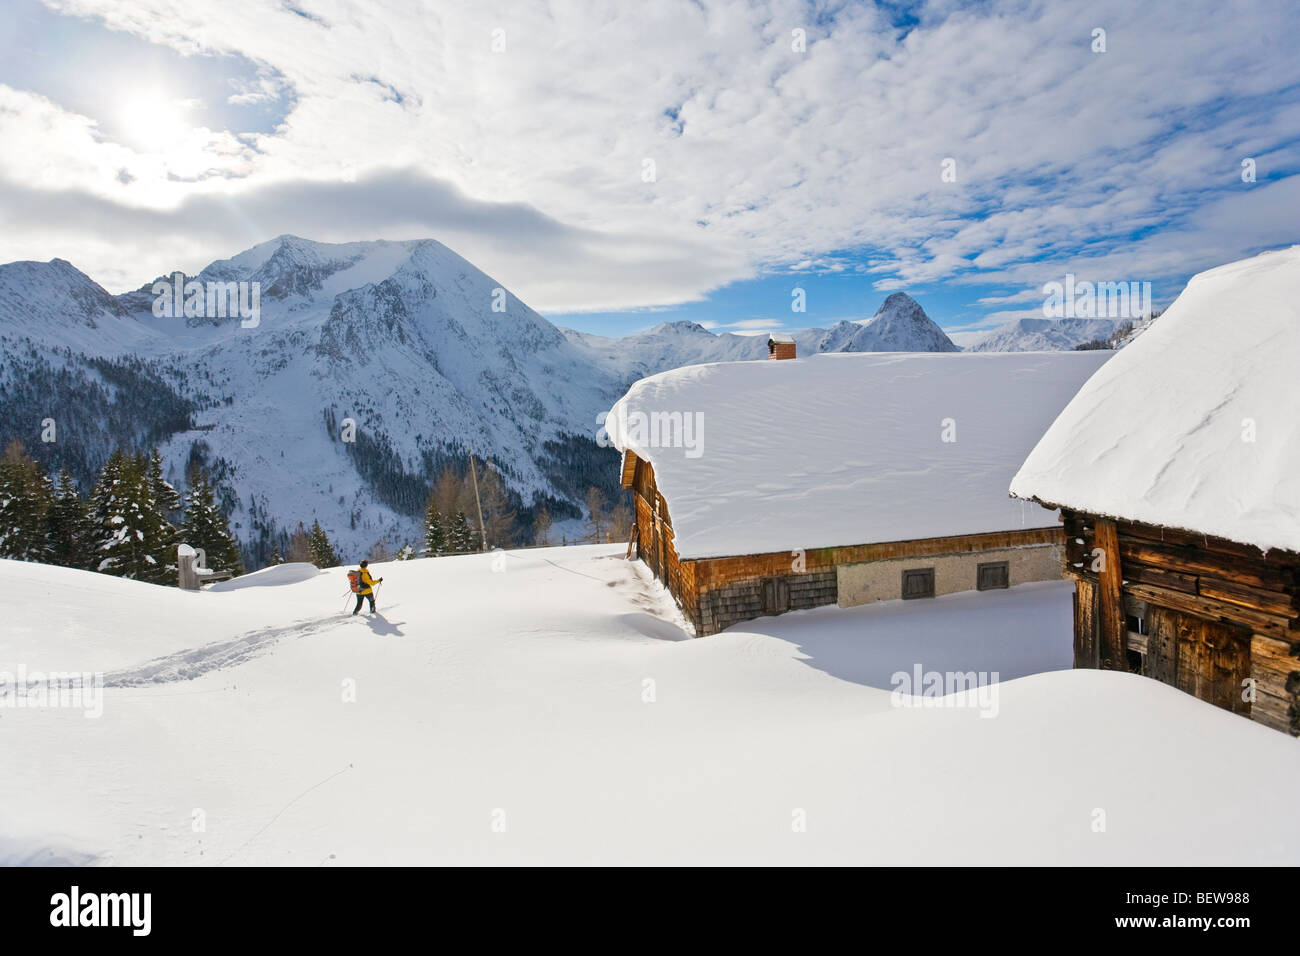 Woman with skis on a snowy mountain pasture with timber houses, Zederhaus, Salzburg, Austria Stock Photo